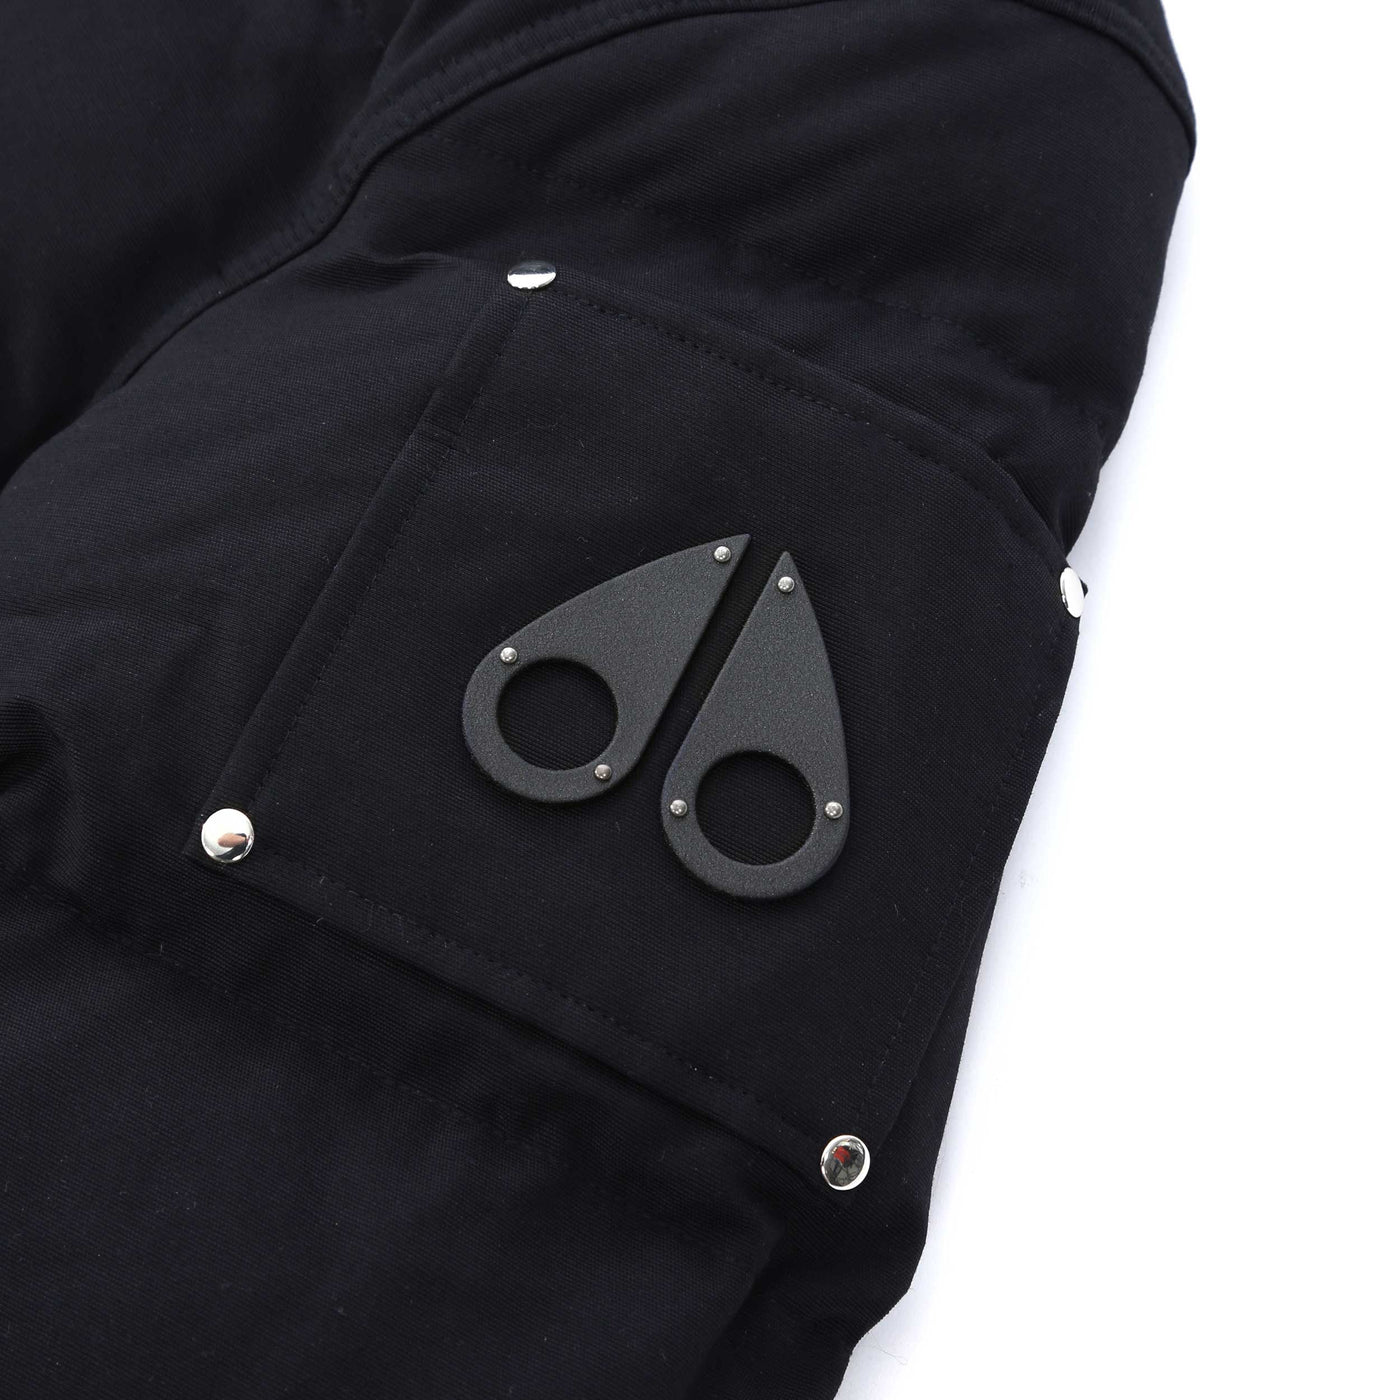 Moose Knuckles 3Q Jacket in Navy & Black Fur Logo